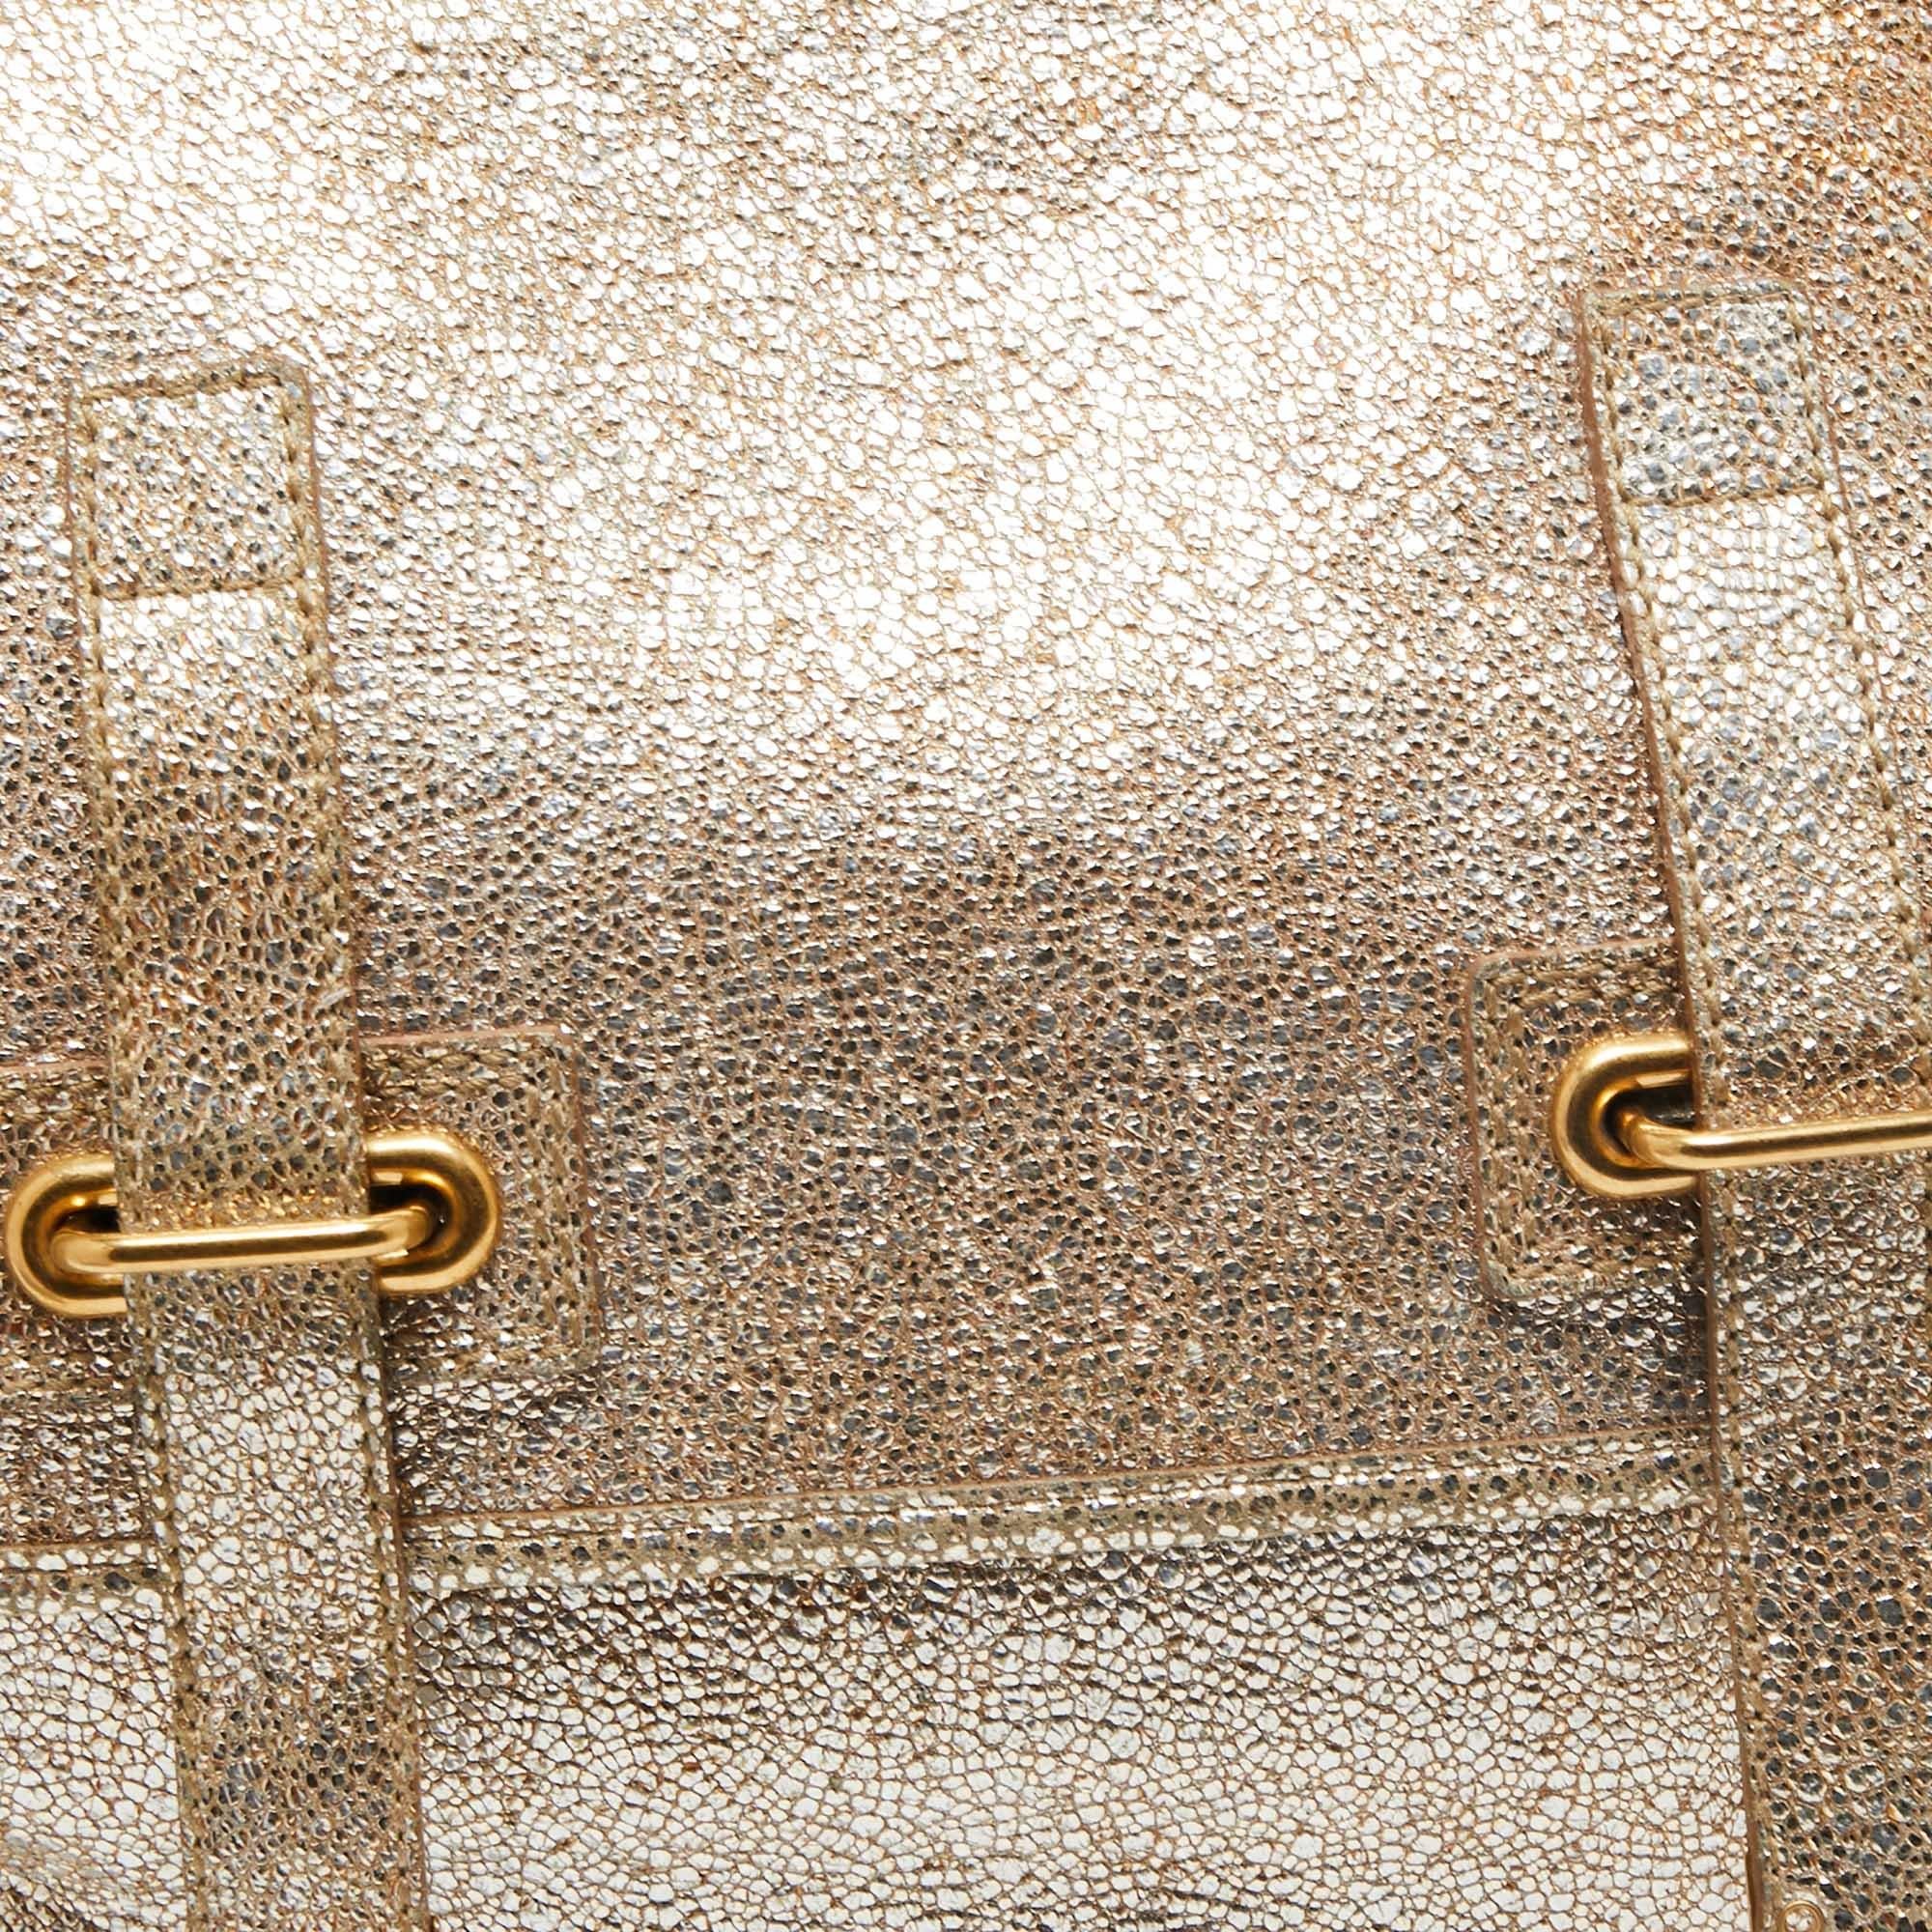 Yves Saint Laurent Metallic Gold Leather Besace Shoulder Bag 1